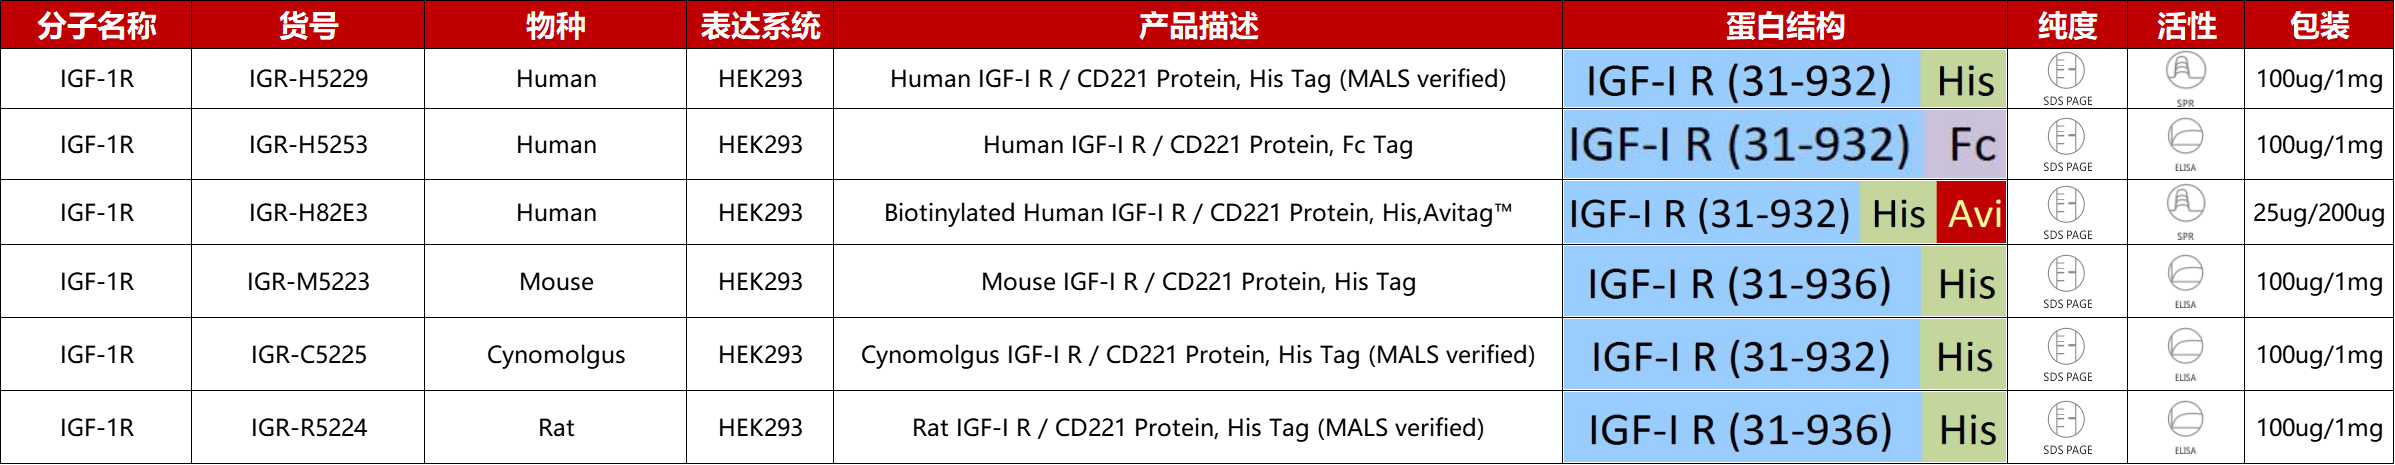 IGF-1R重组蛋白产品列表